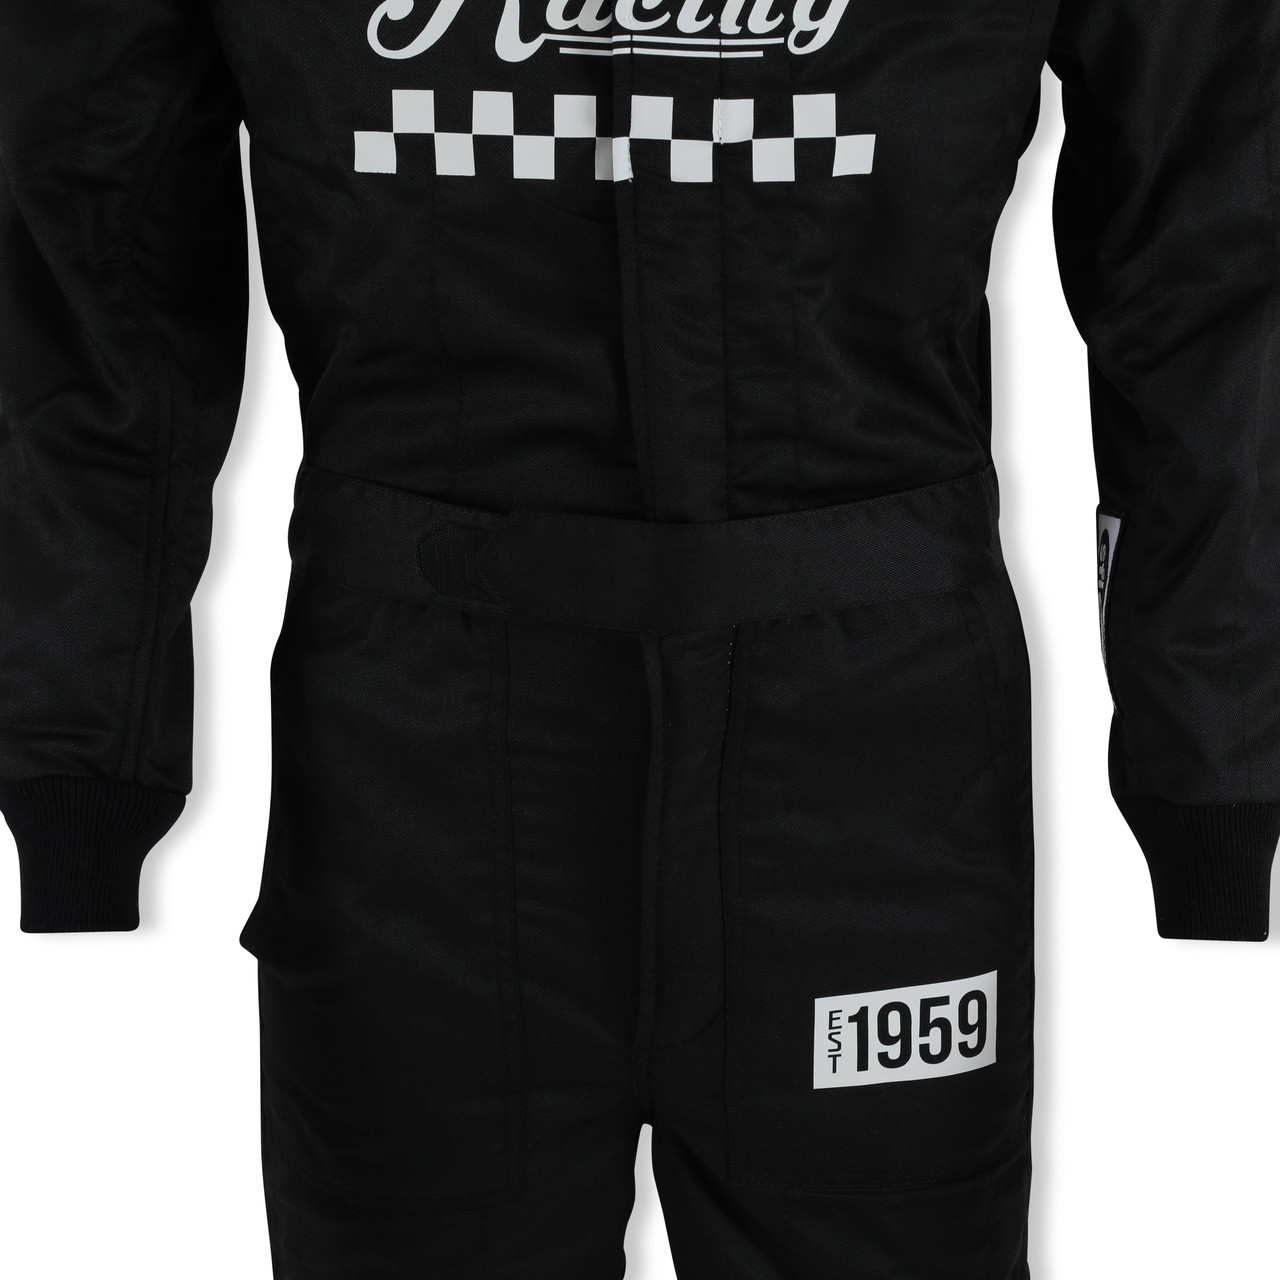 Simpson Adult Checkers Racing Suit Sfi 5 Black